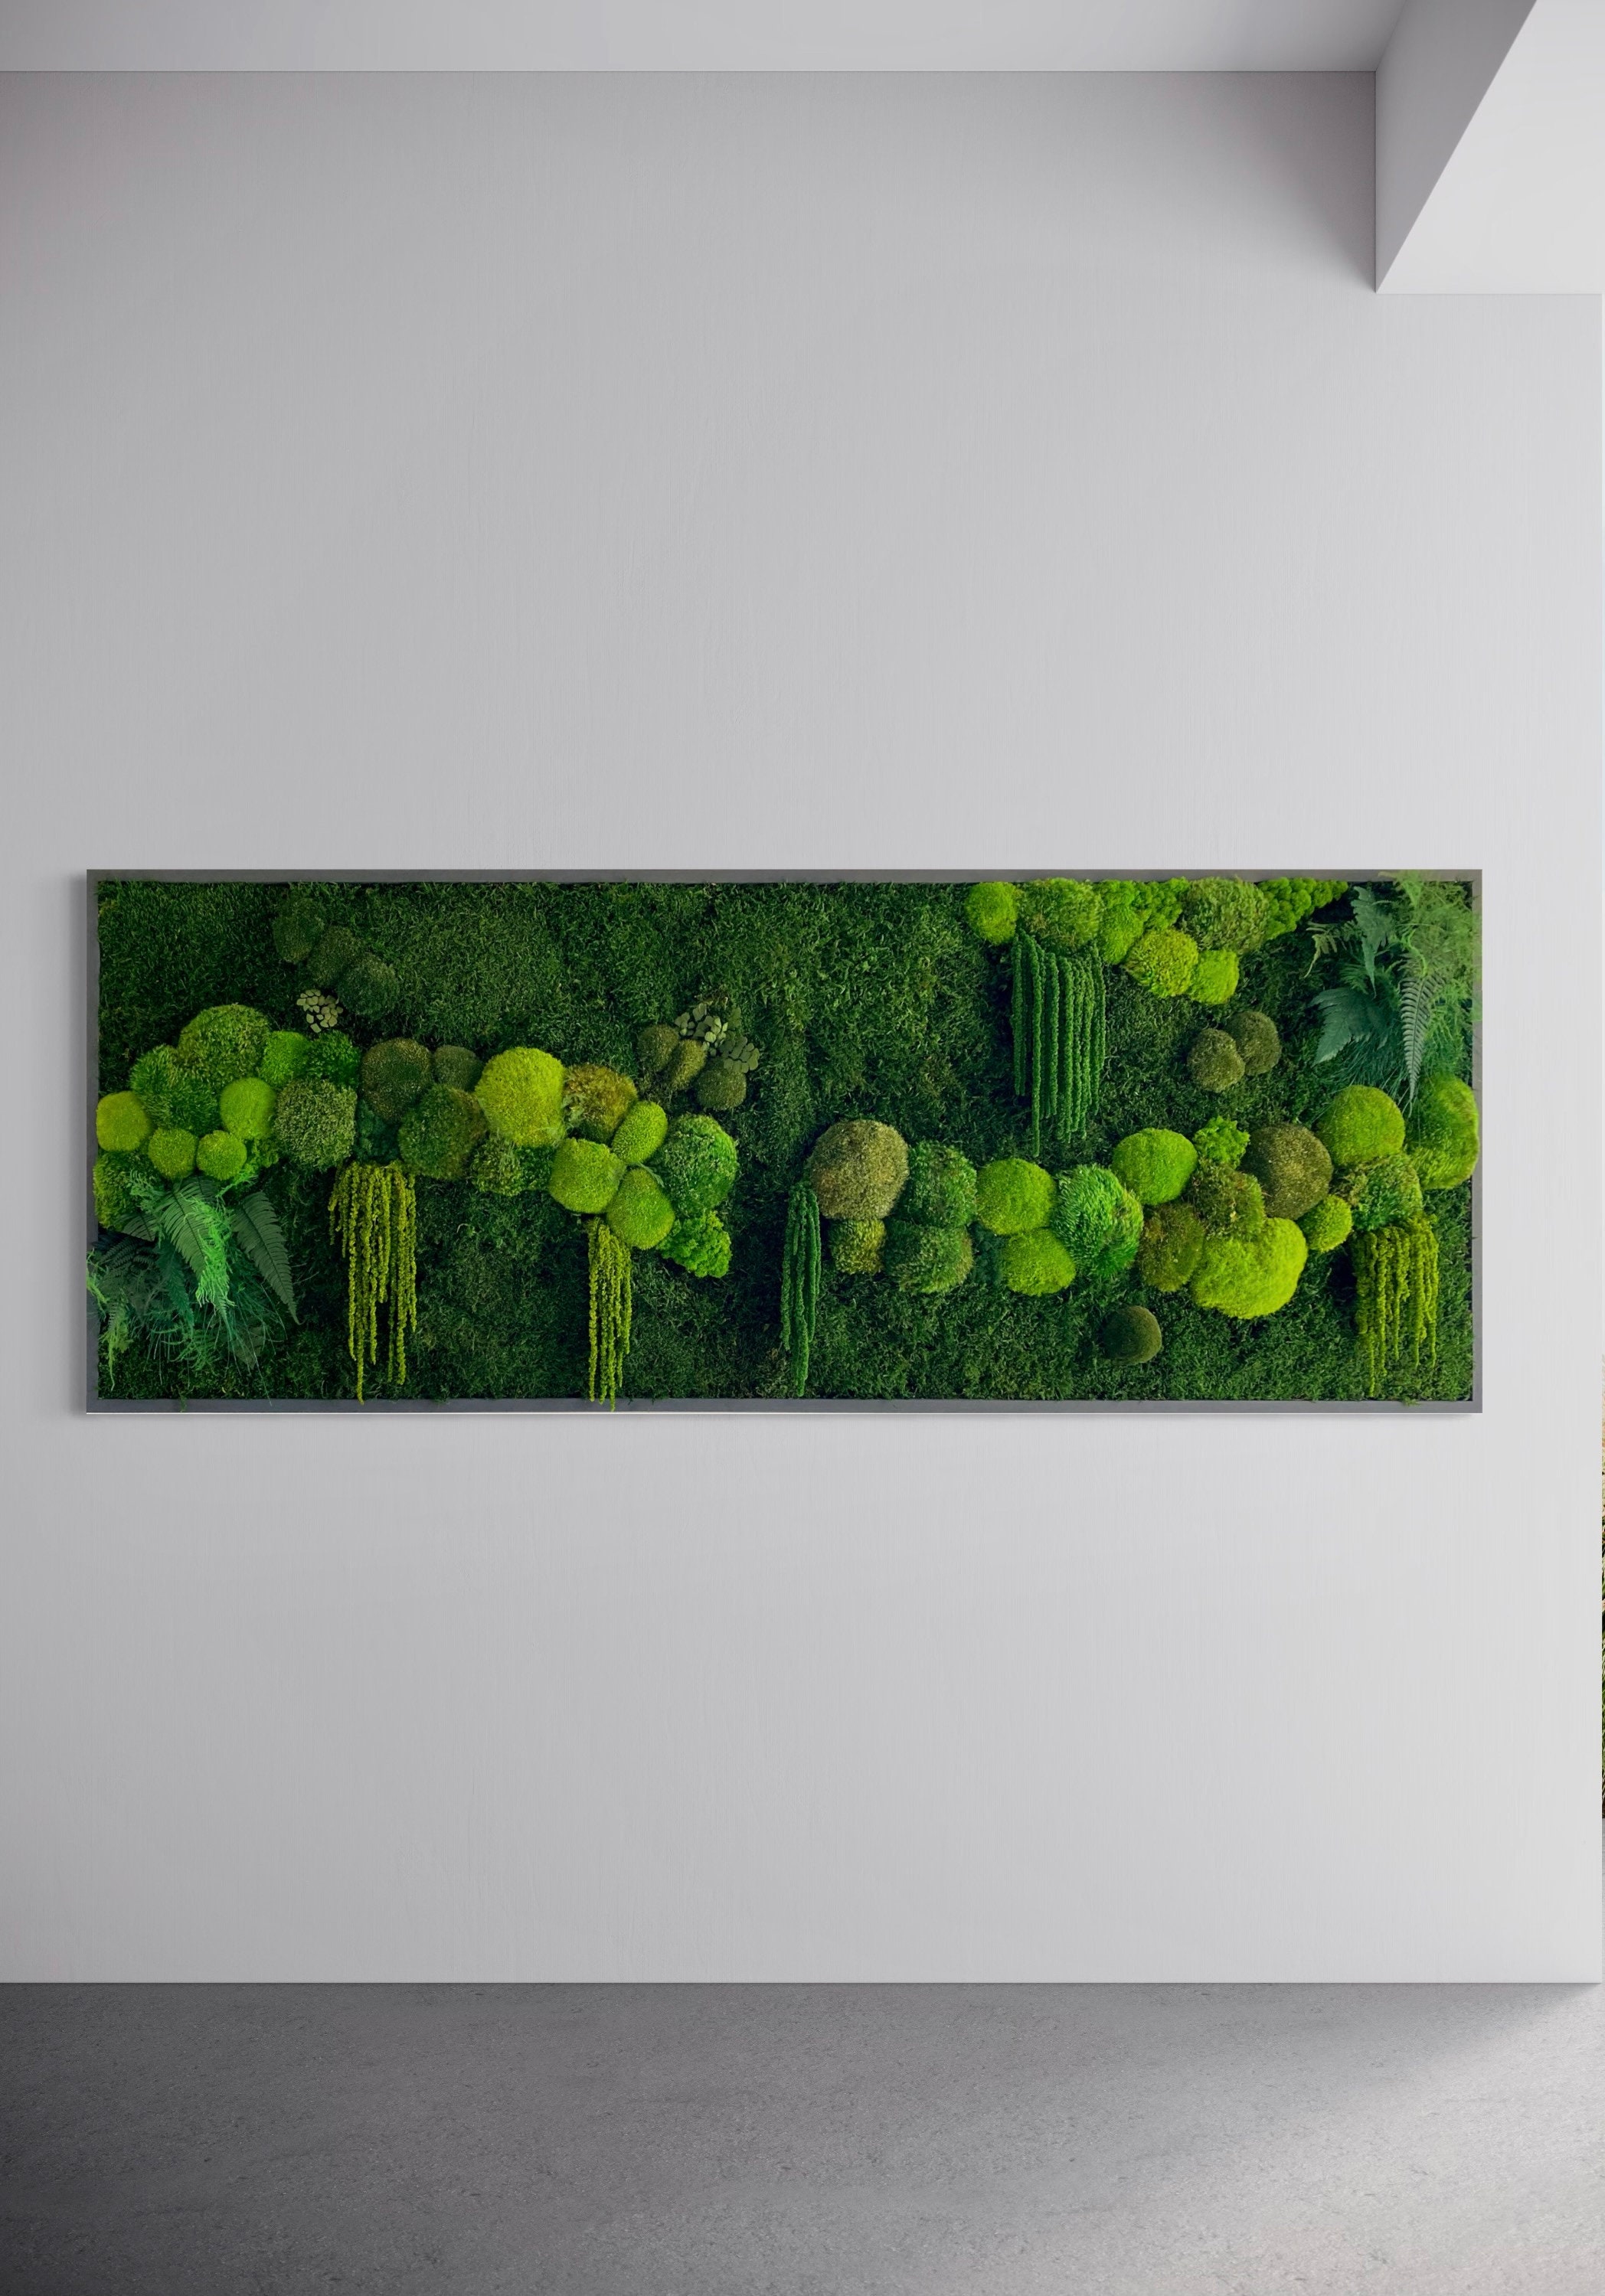 18x36 Cushion Moss Wall Art